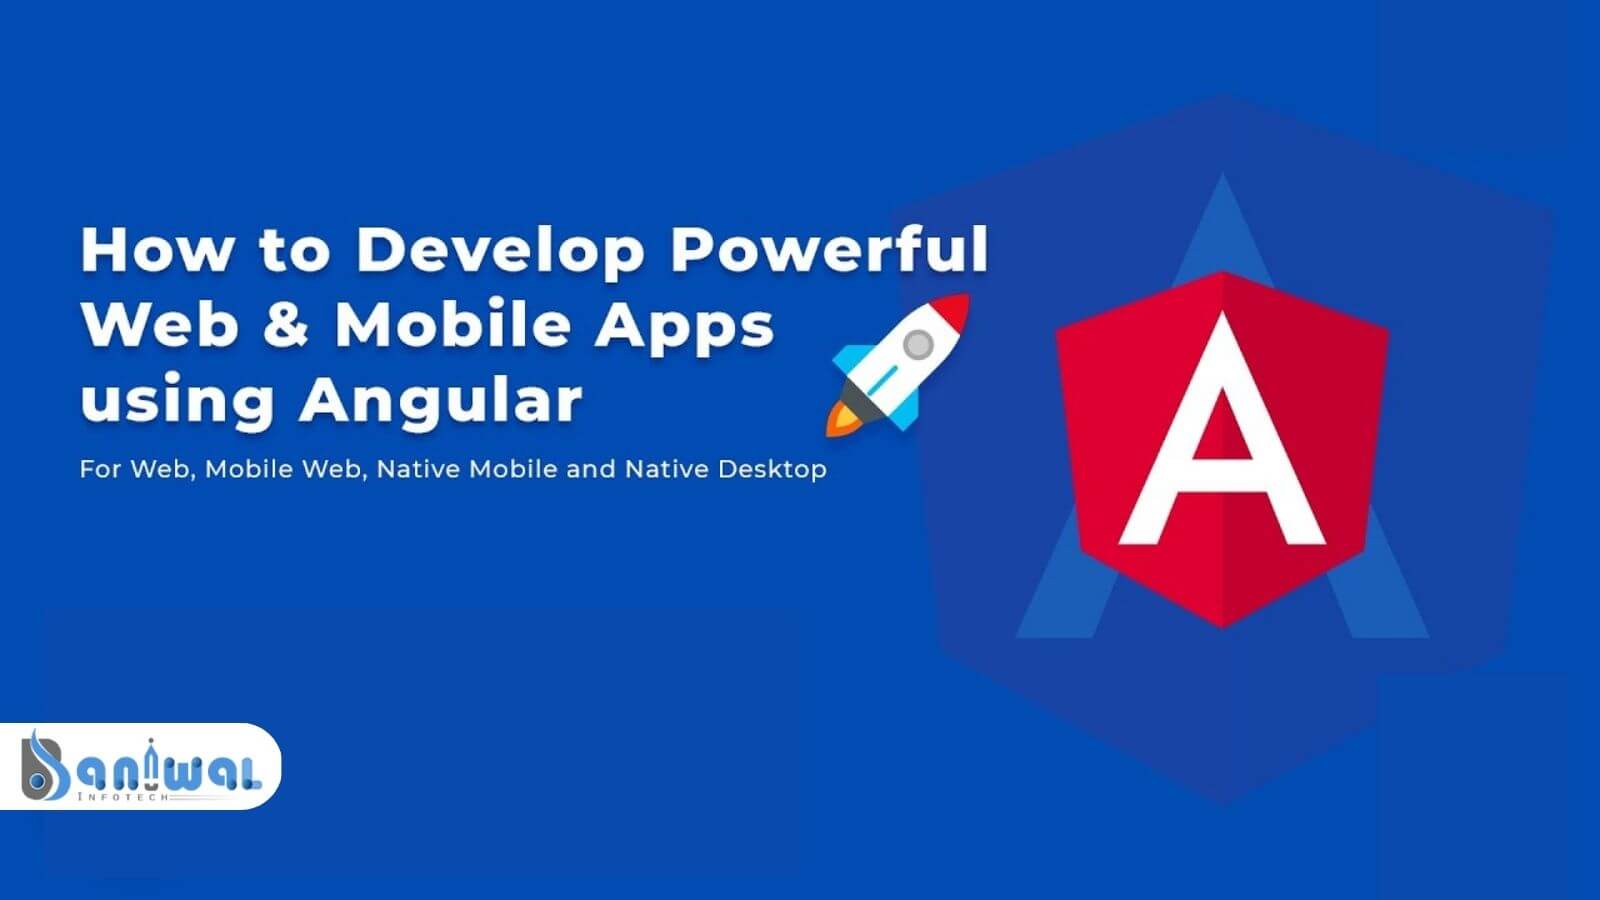 angularjs mobile app development services - Baniwal Infotech